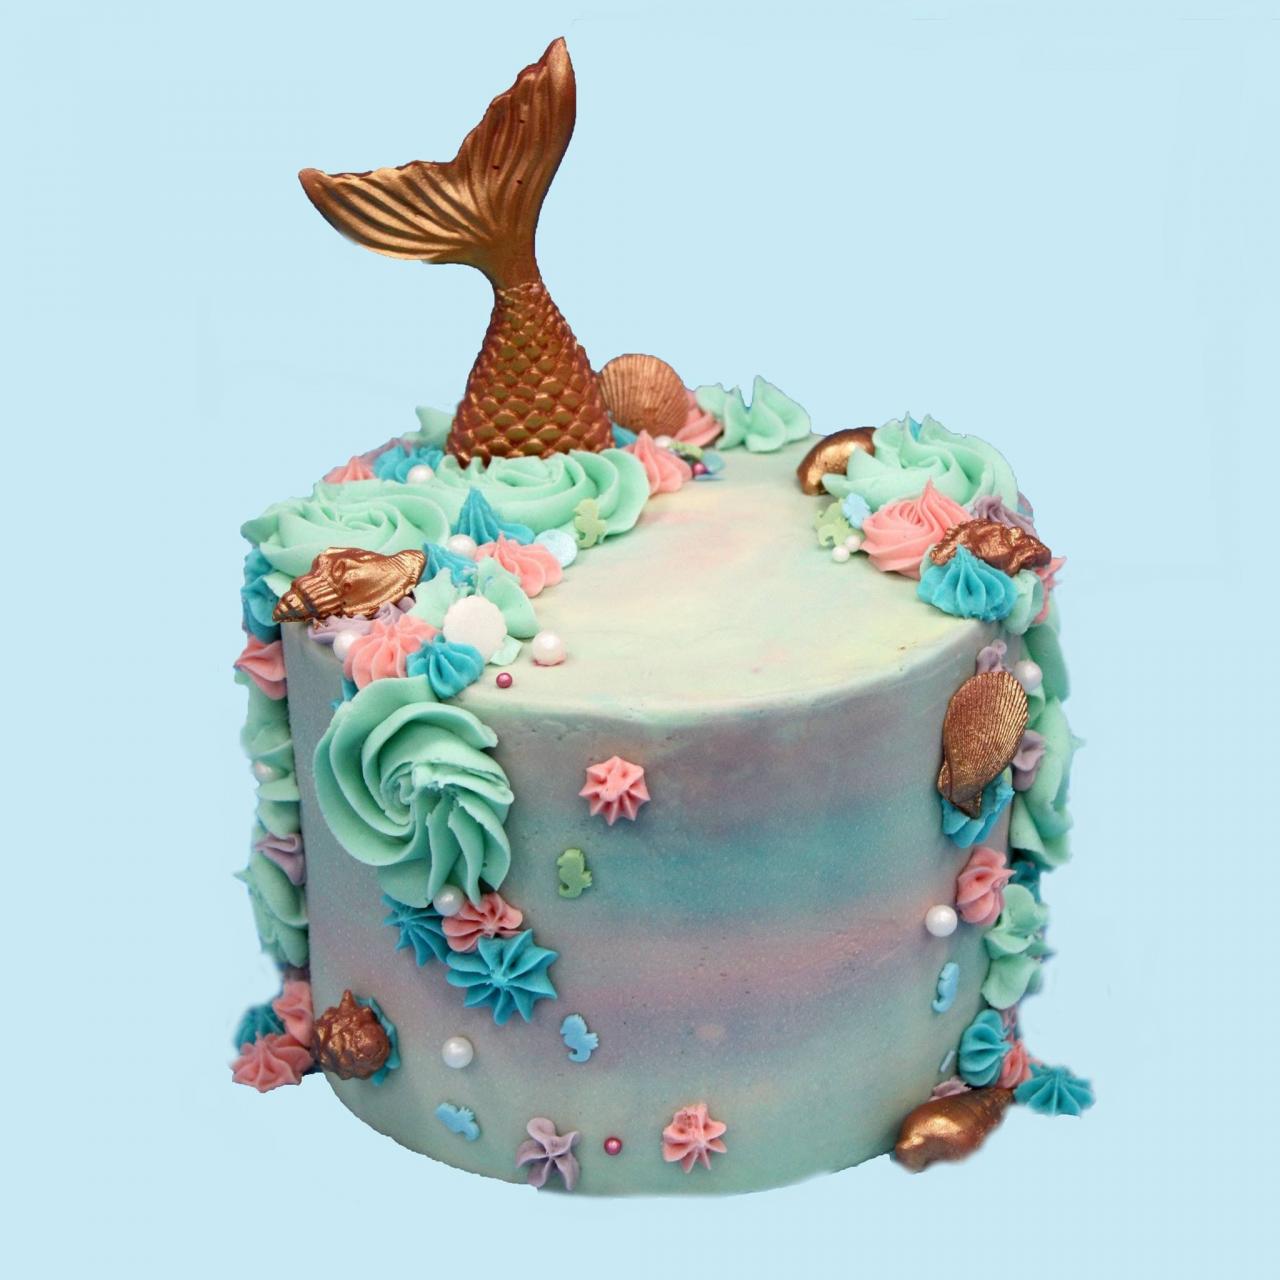 Little mermaid cake decorations